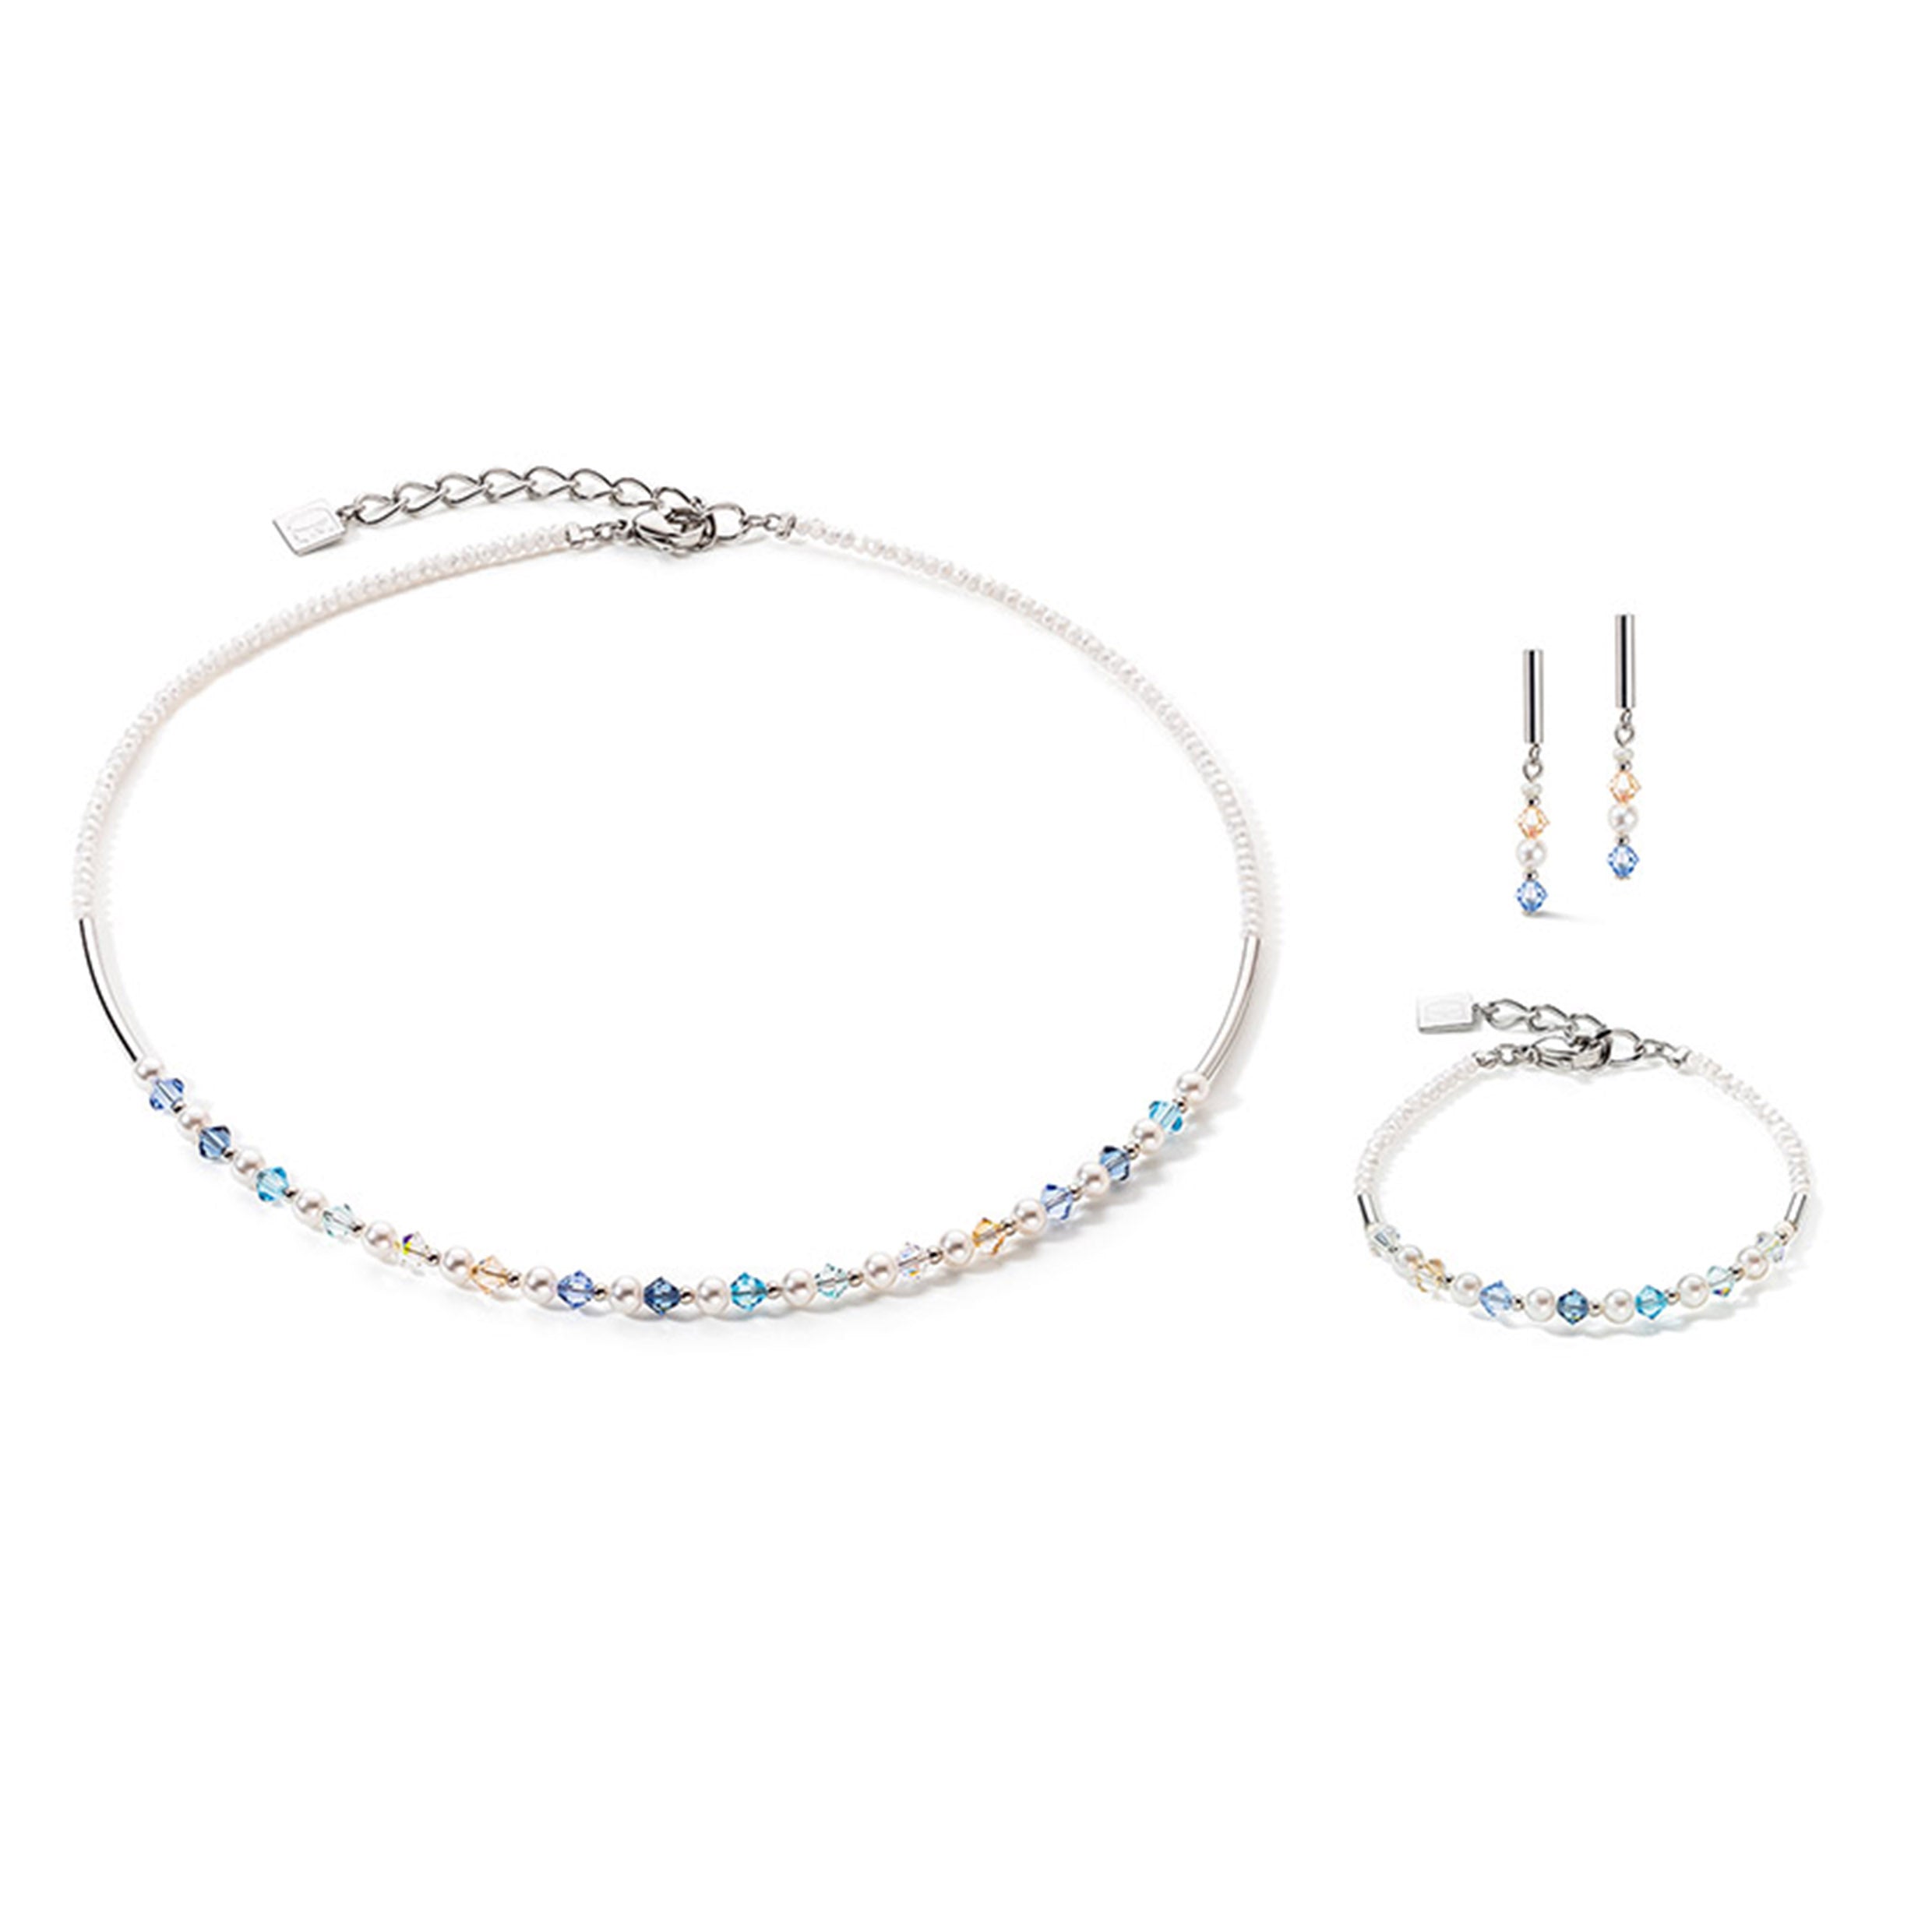 Blue European Crystals & Stainless Steel Bracelet 6022/30_0720